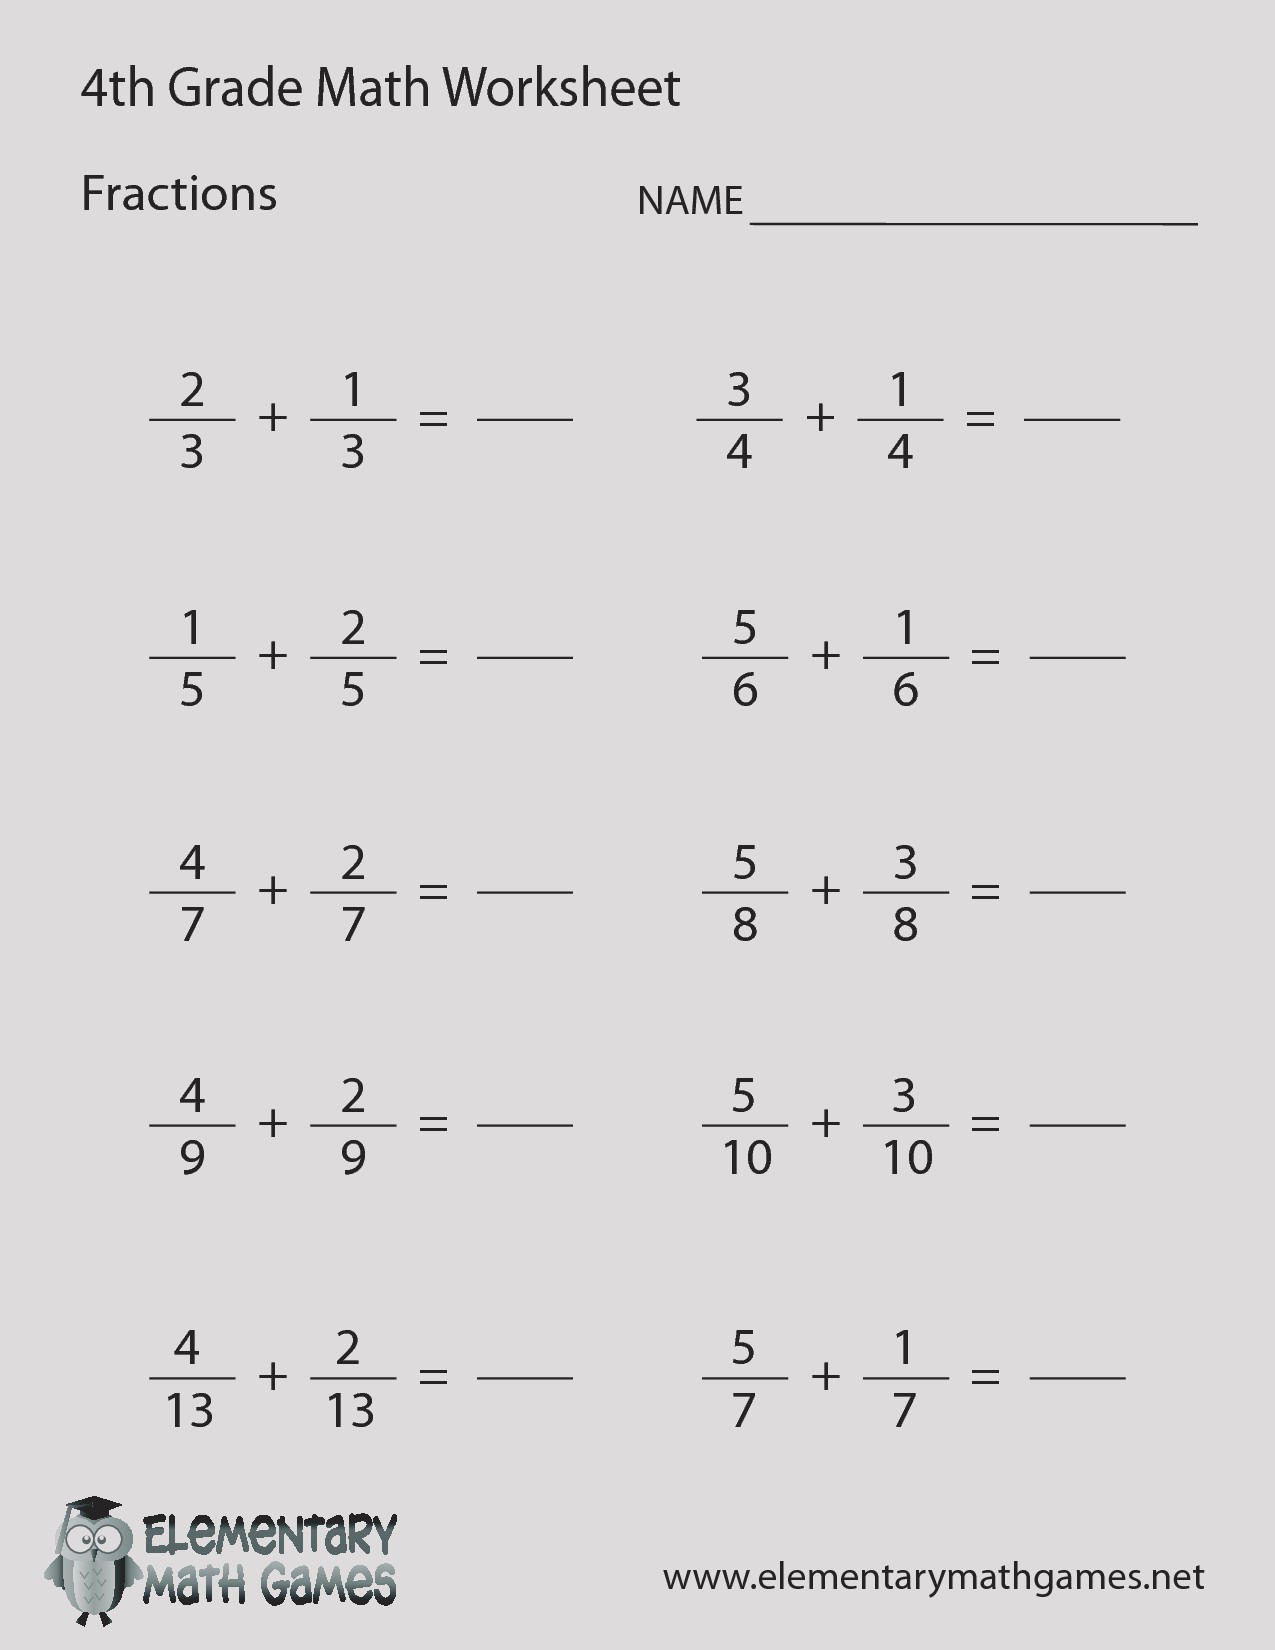 act mathematics practice tests pdf